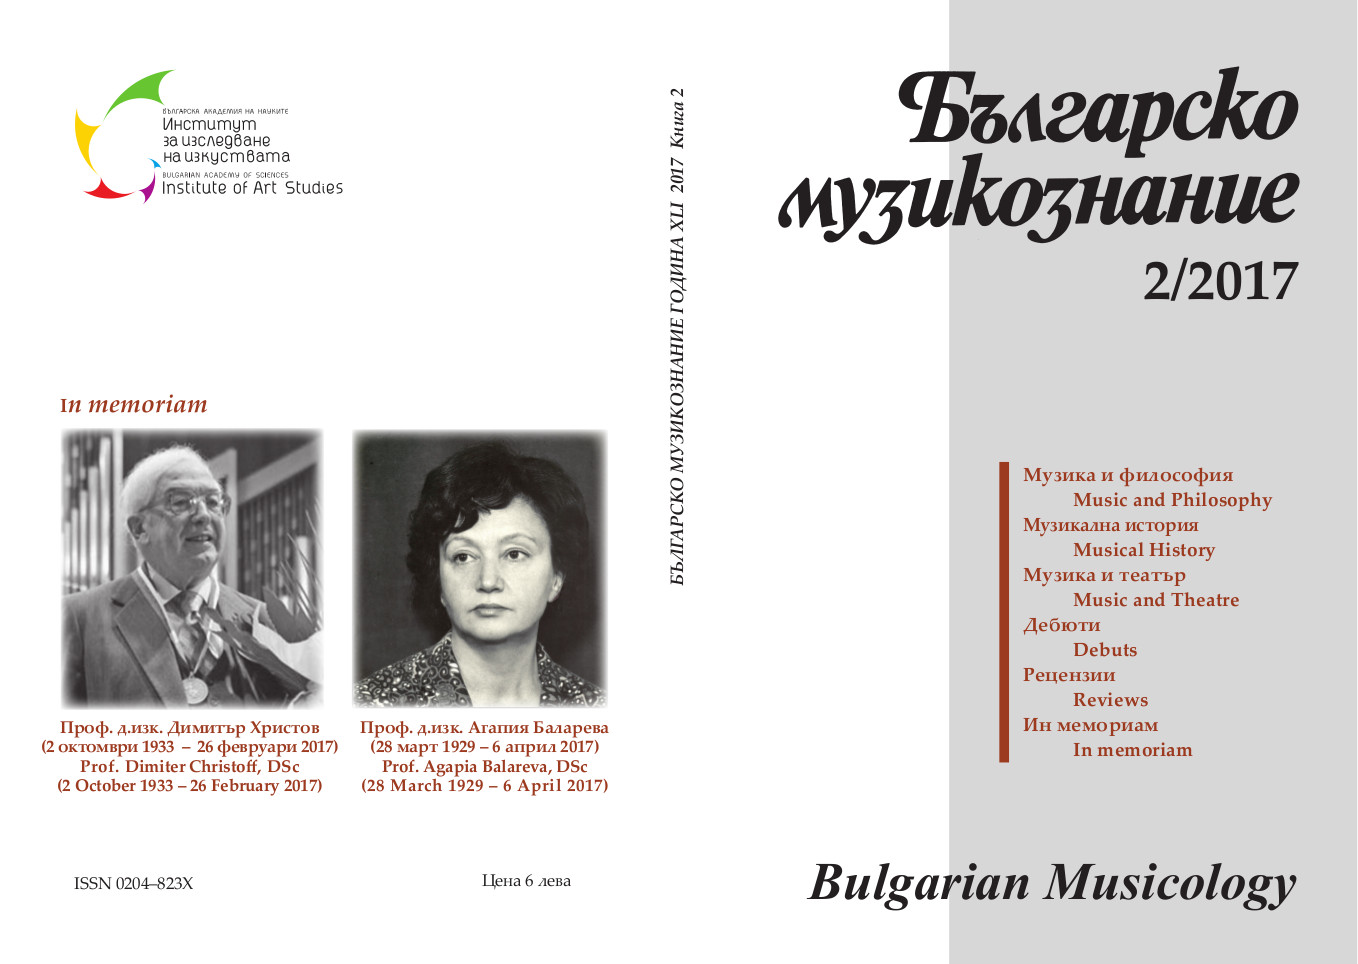 Studying Dobri Hristov’s legacy historically Cover Image